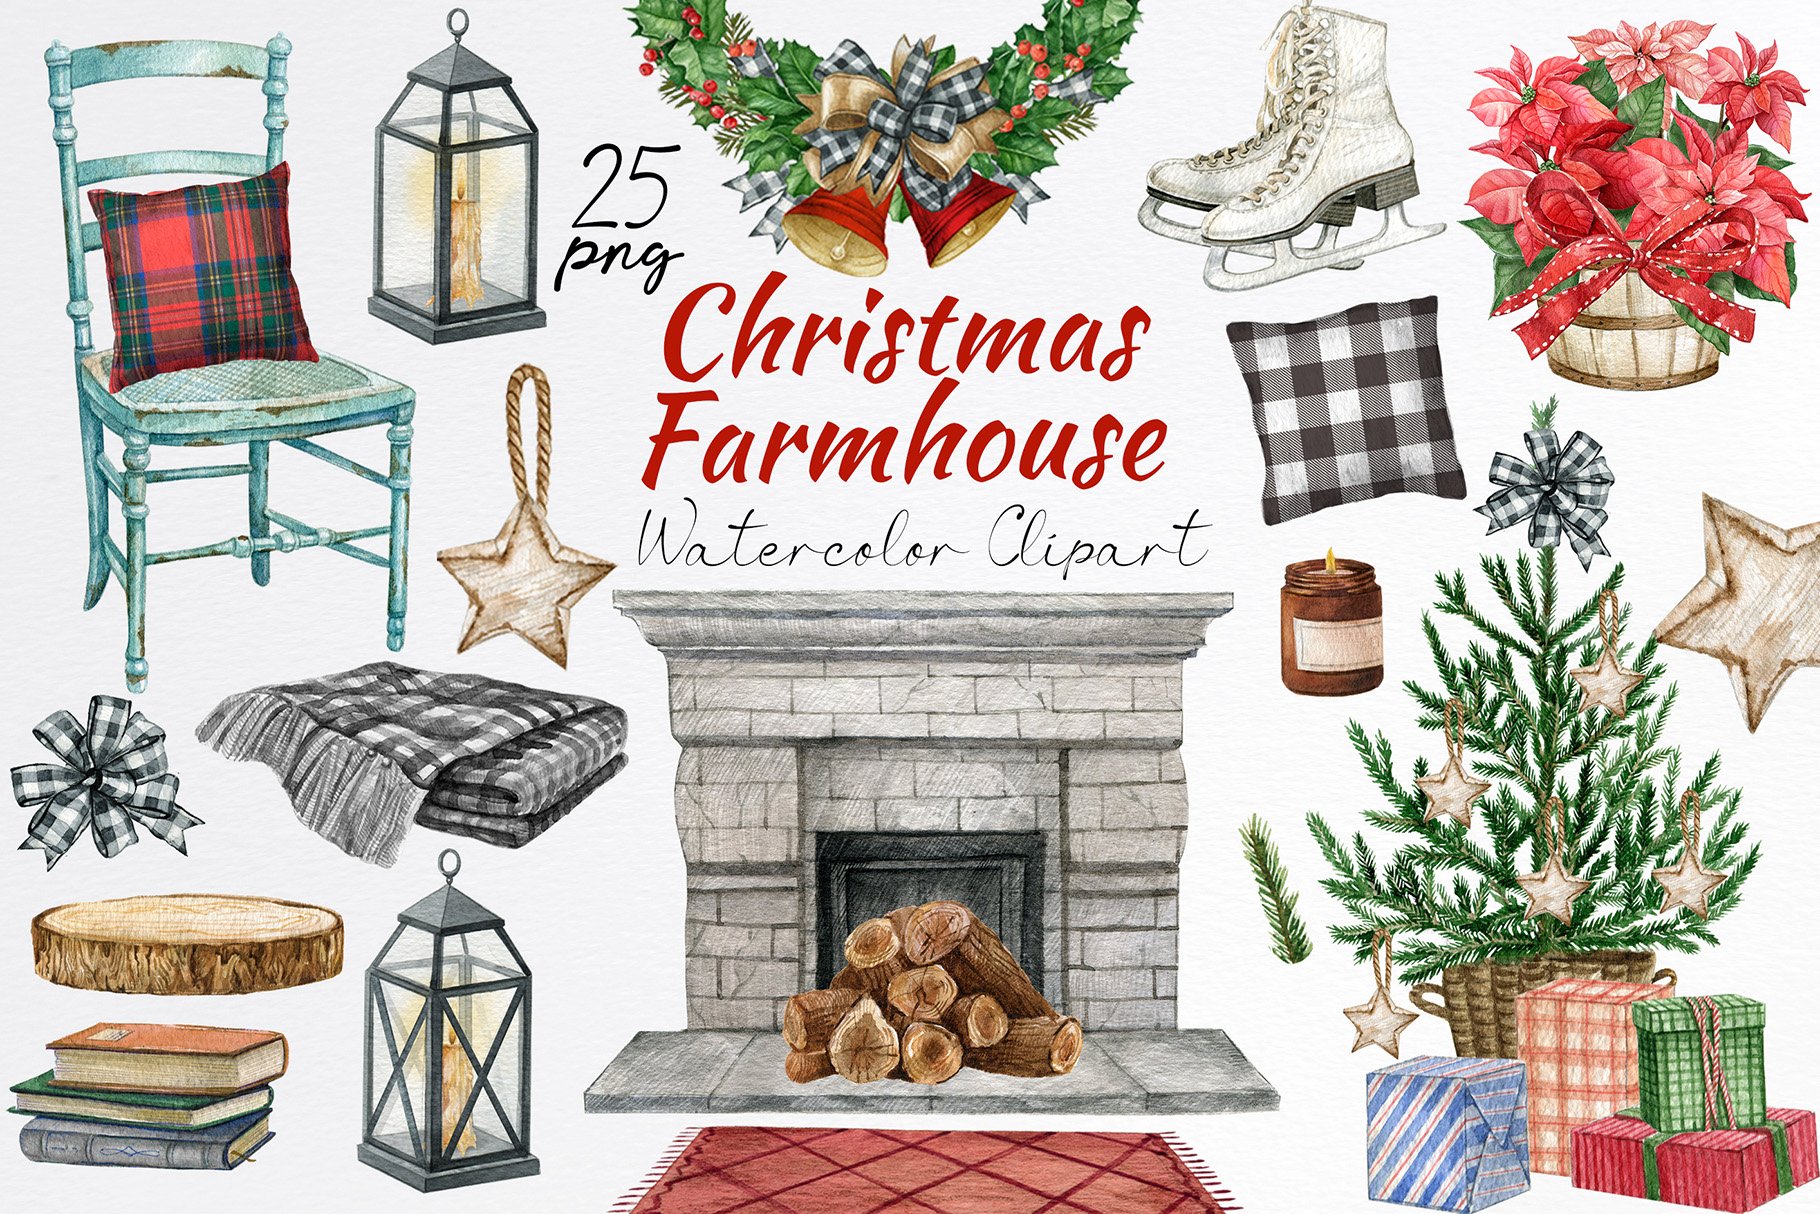 Farmhouse christmas decor clipart. cover image.